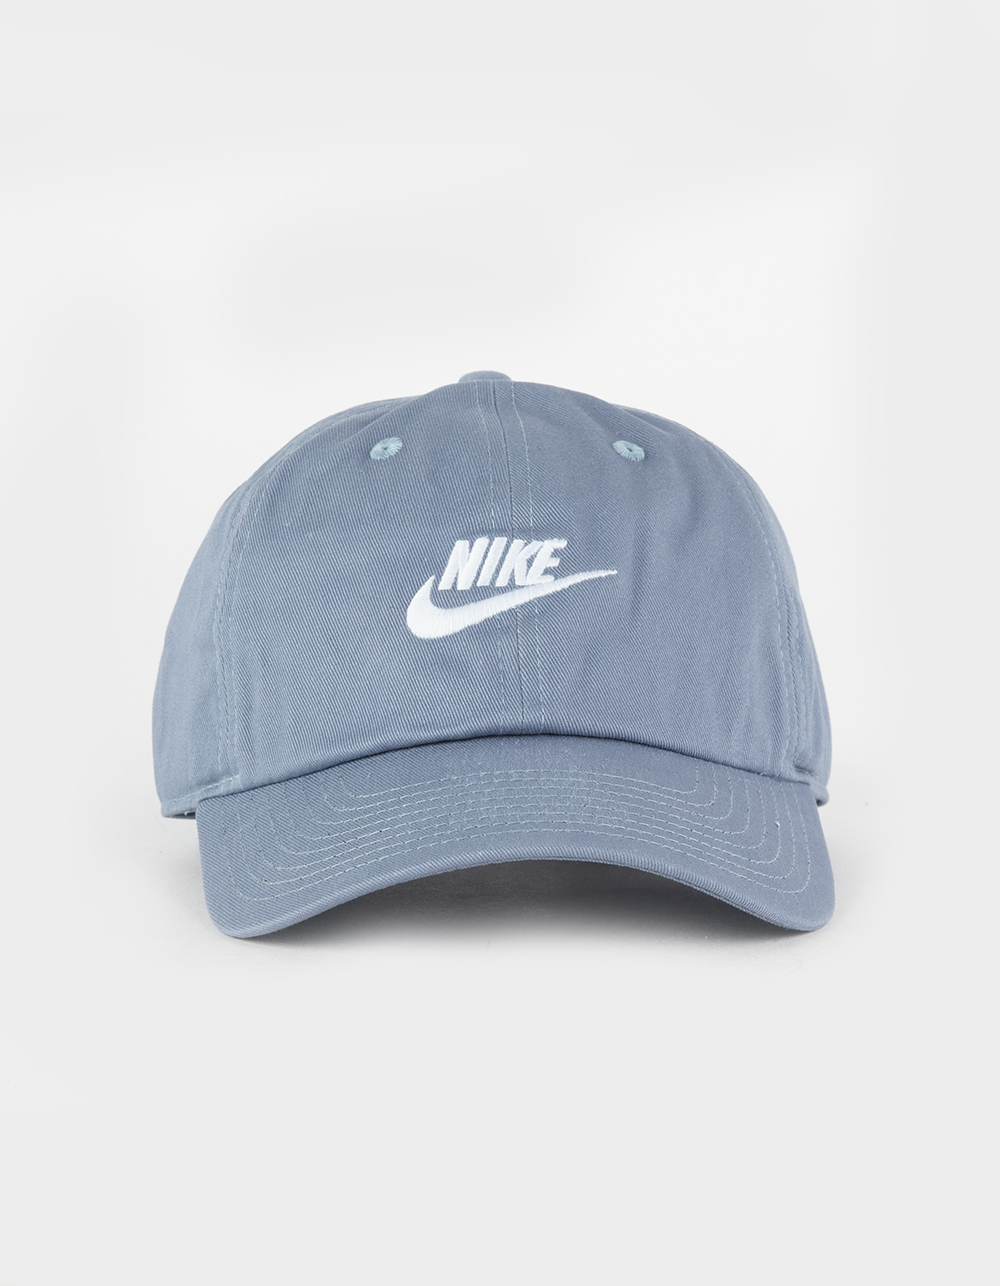 Doe herleven Cilia atomair NIKE Sportswear Heritage 86 Futura Washed Strapback Hat - SLATE BLUE |  Tillys